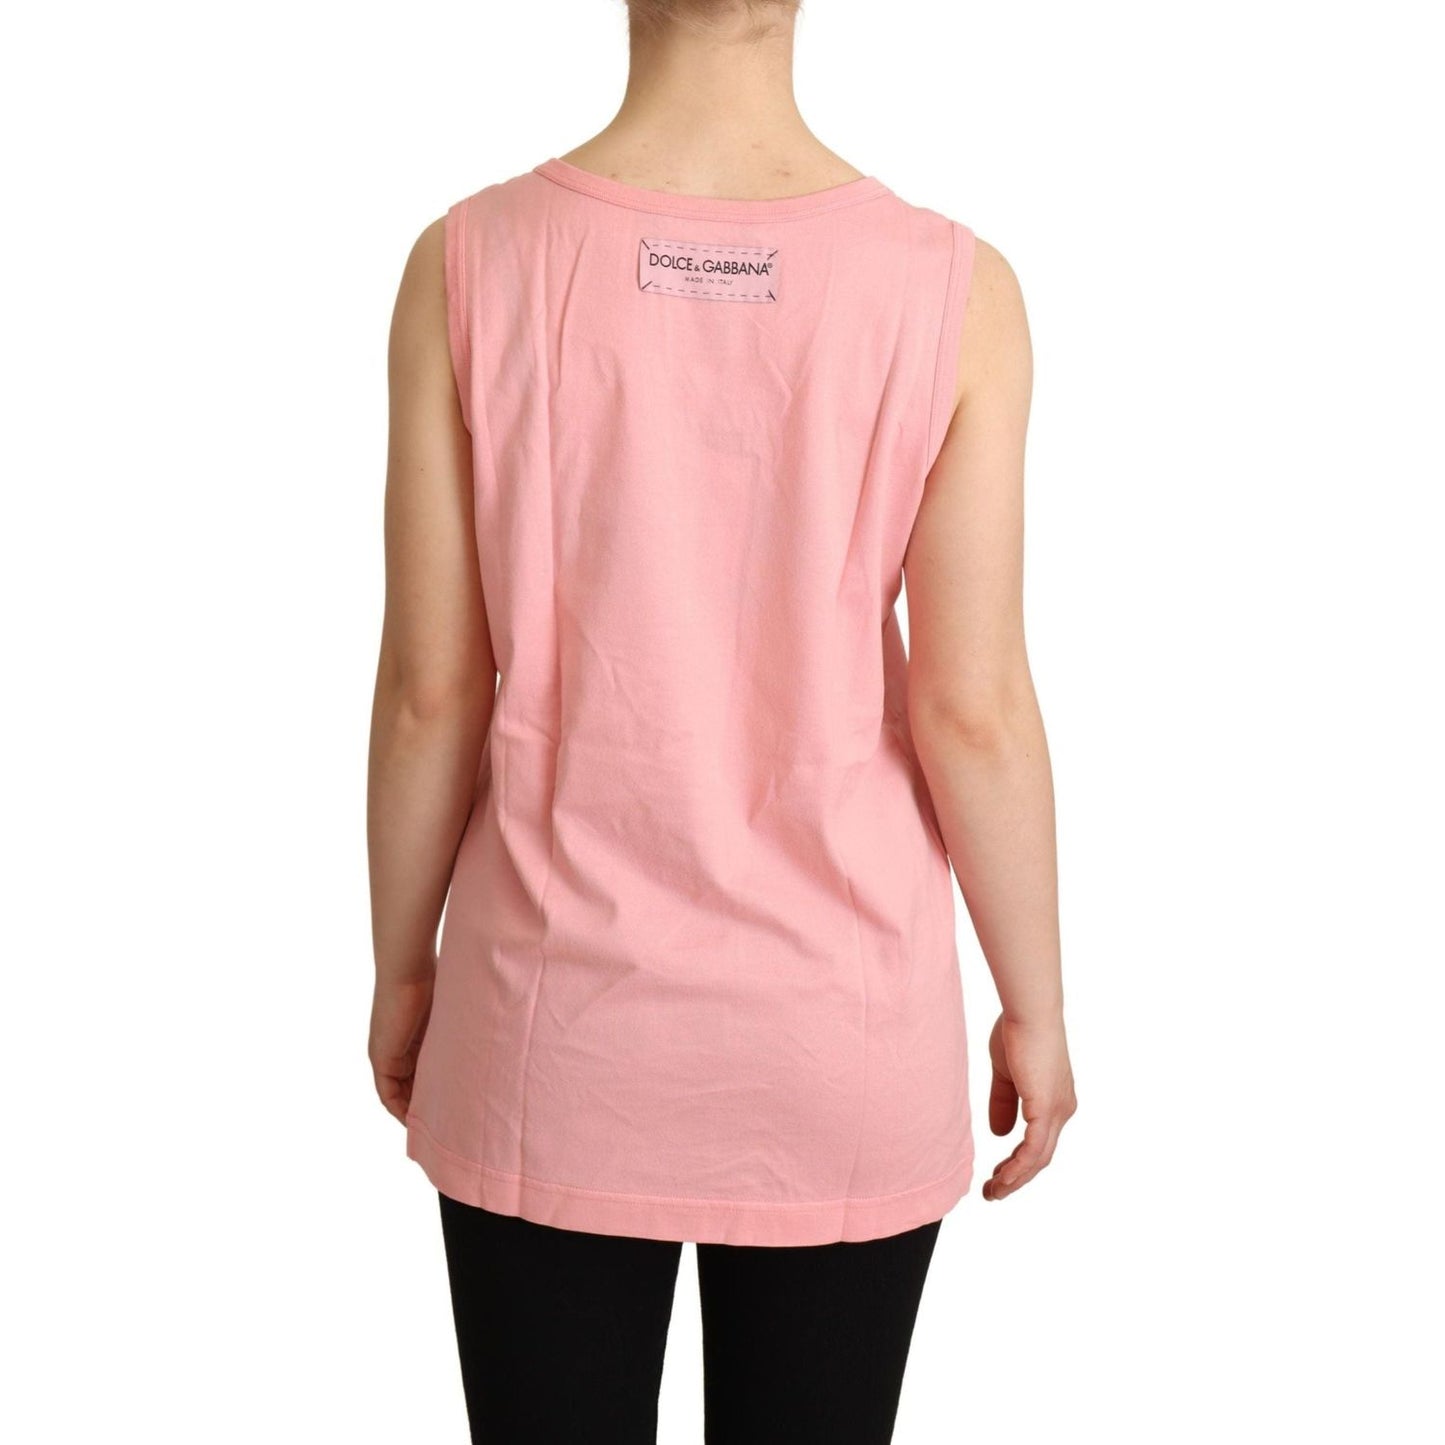 Dolce & Gabbana Chic Pink Motive Print Crewneck Tee WOMAN T-SHIRTS pink-all-the-lovers-tank-top-t-shirt